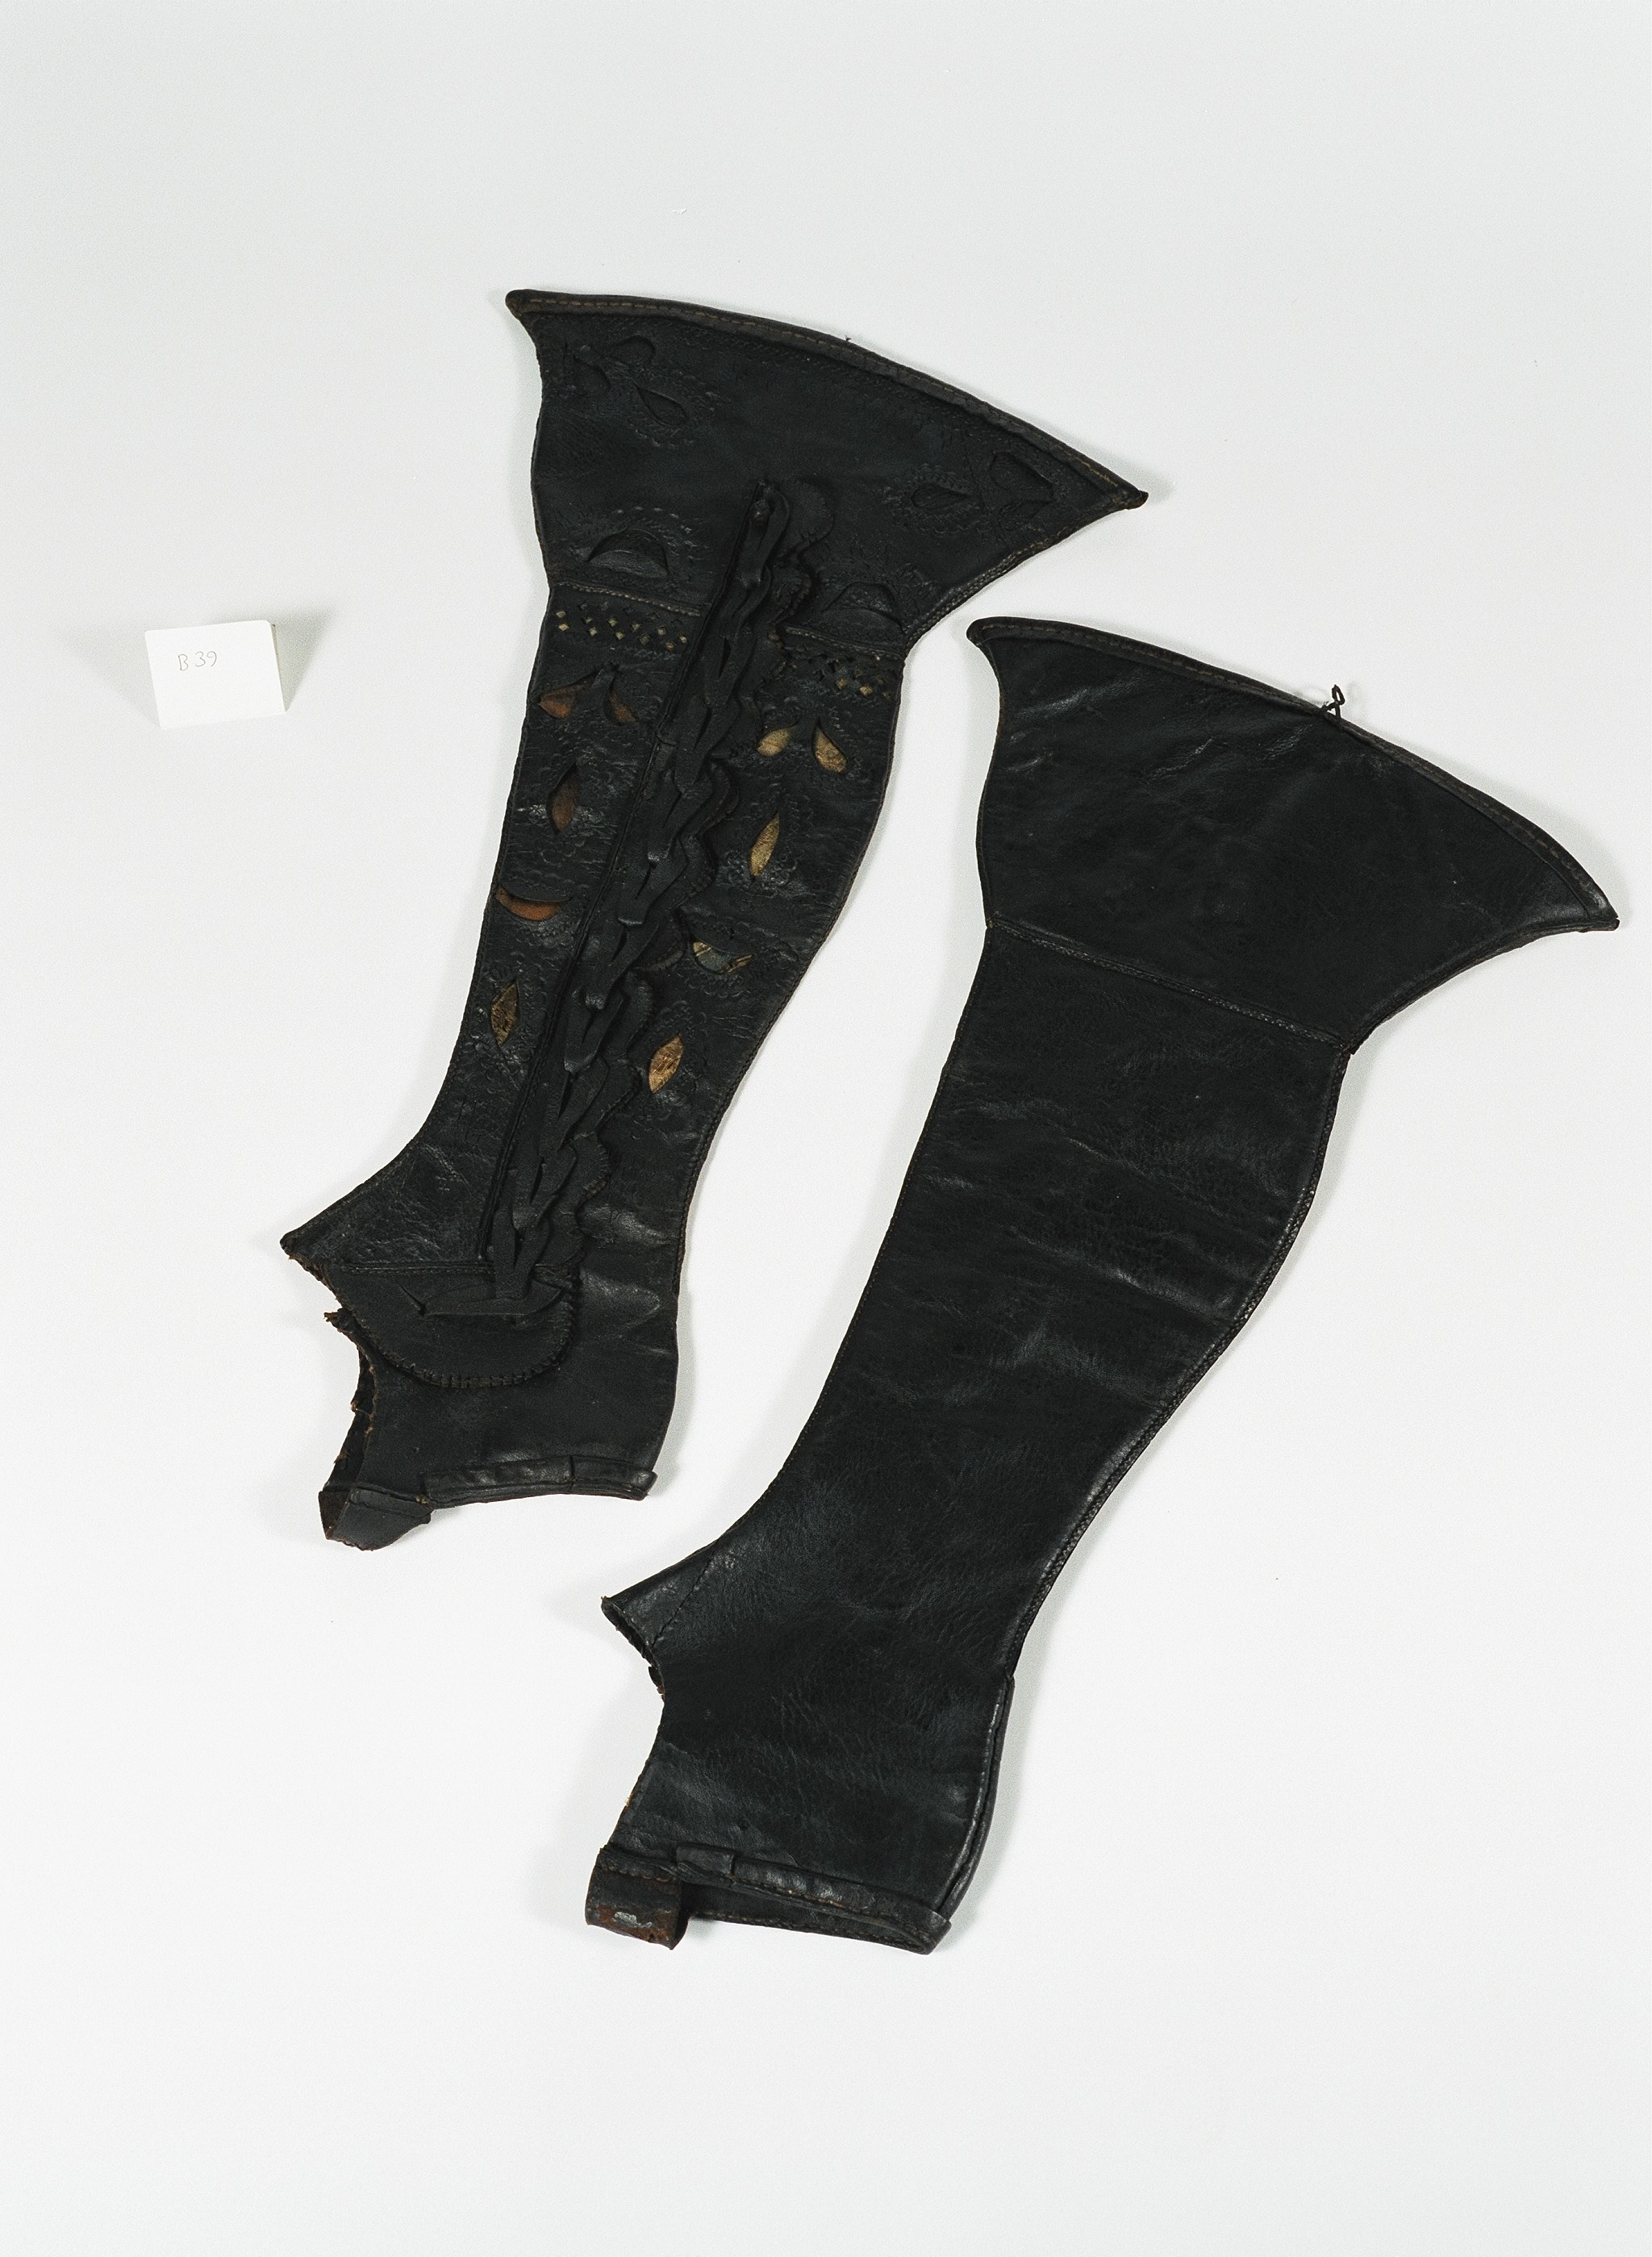 Leather Gaiters, c. 1650. thumbnail